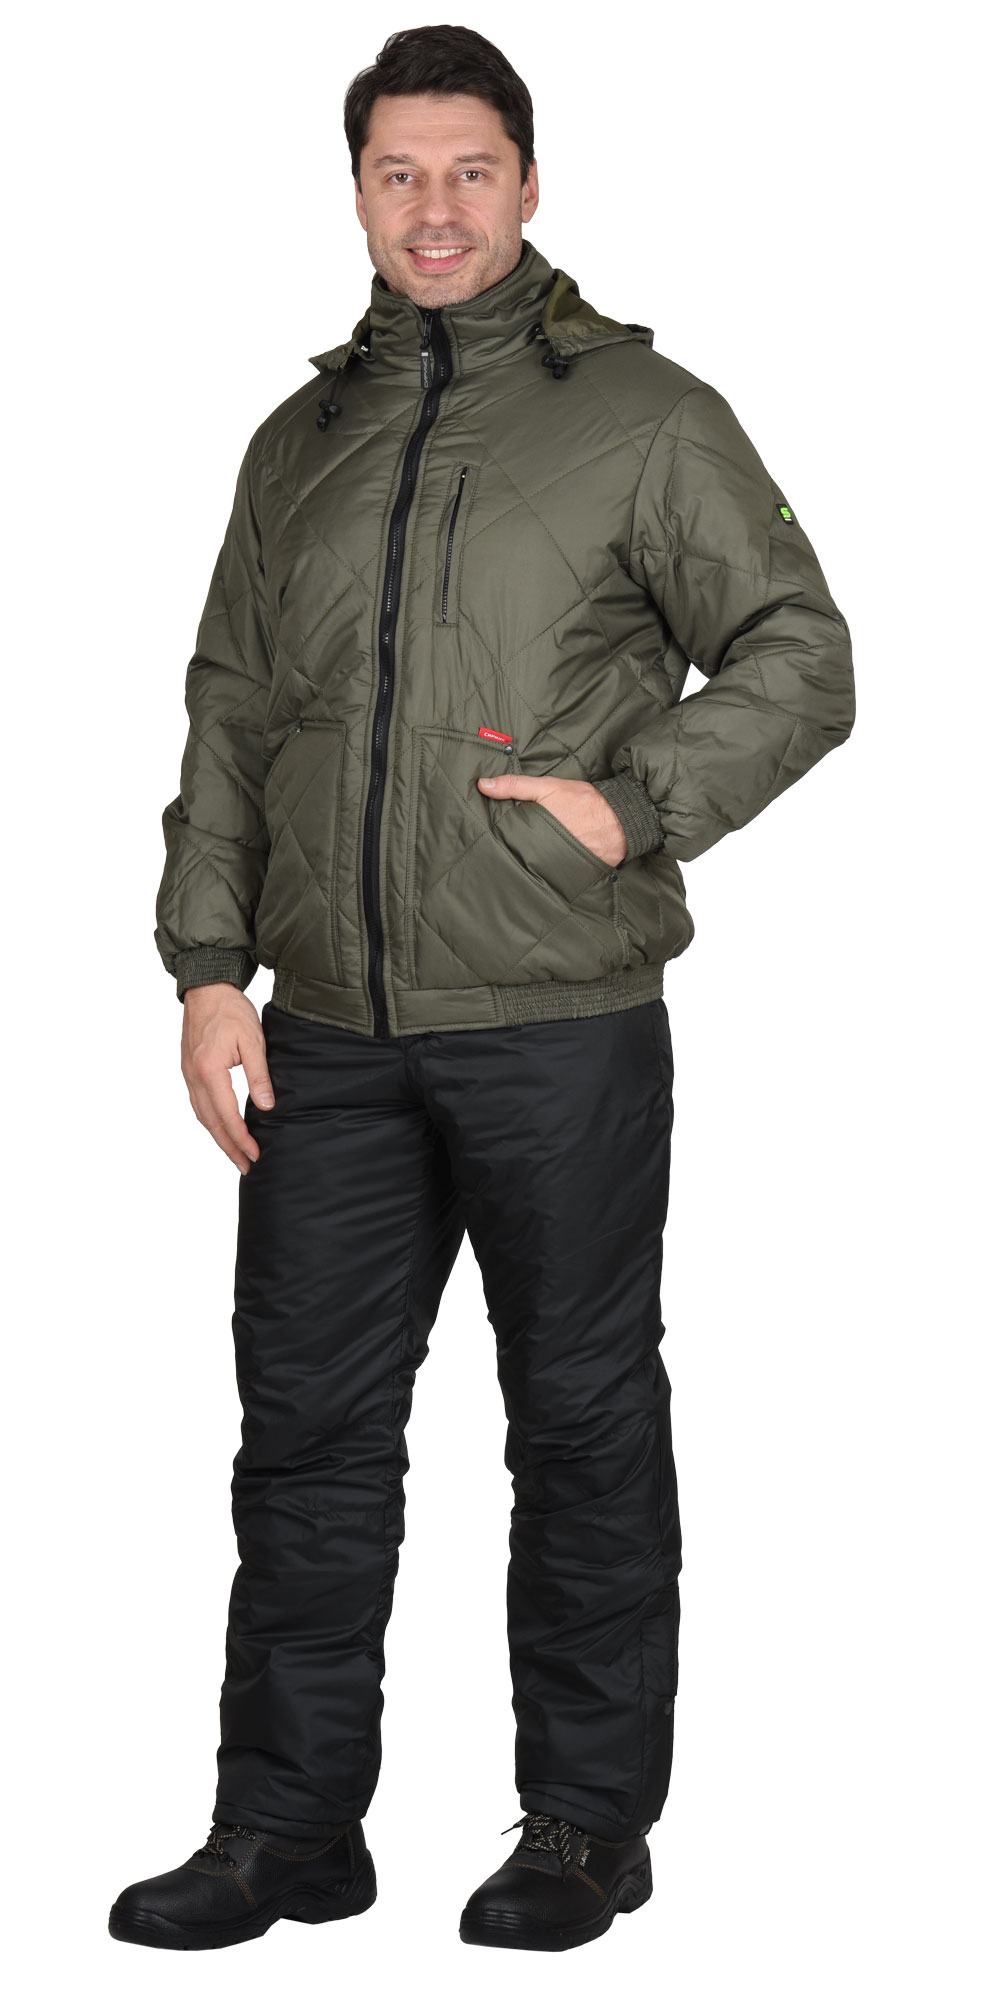 Зимняя куртка "СИРИУС-ПРАГА-Люкс" мужская, короткая, утепленная, цвет: оливковый, ткань: 100% ПЭ